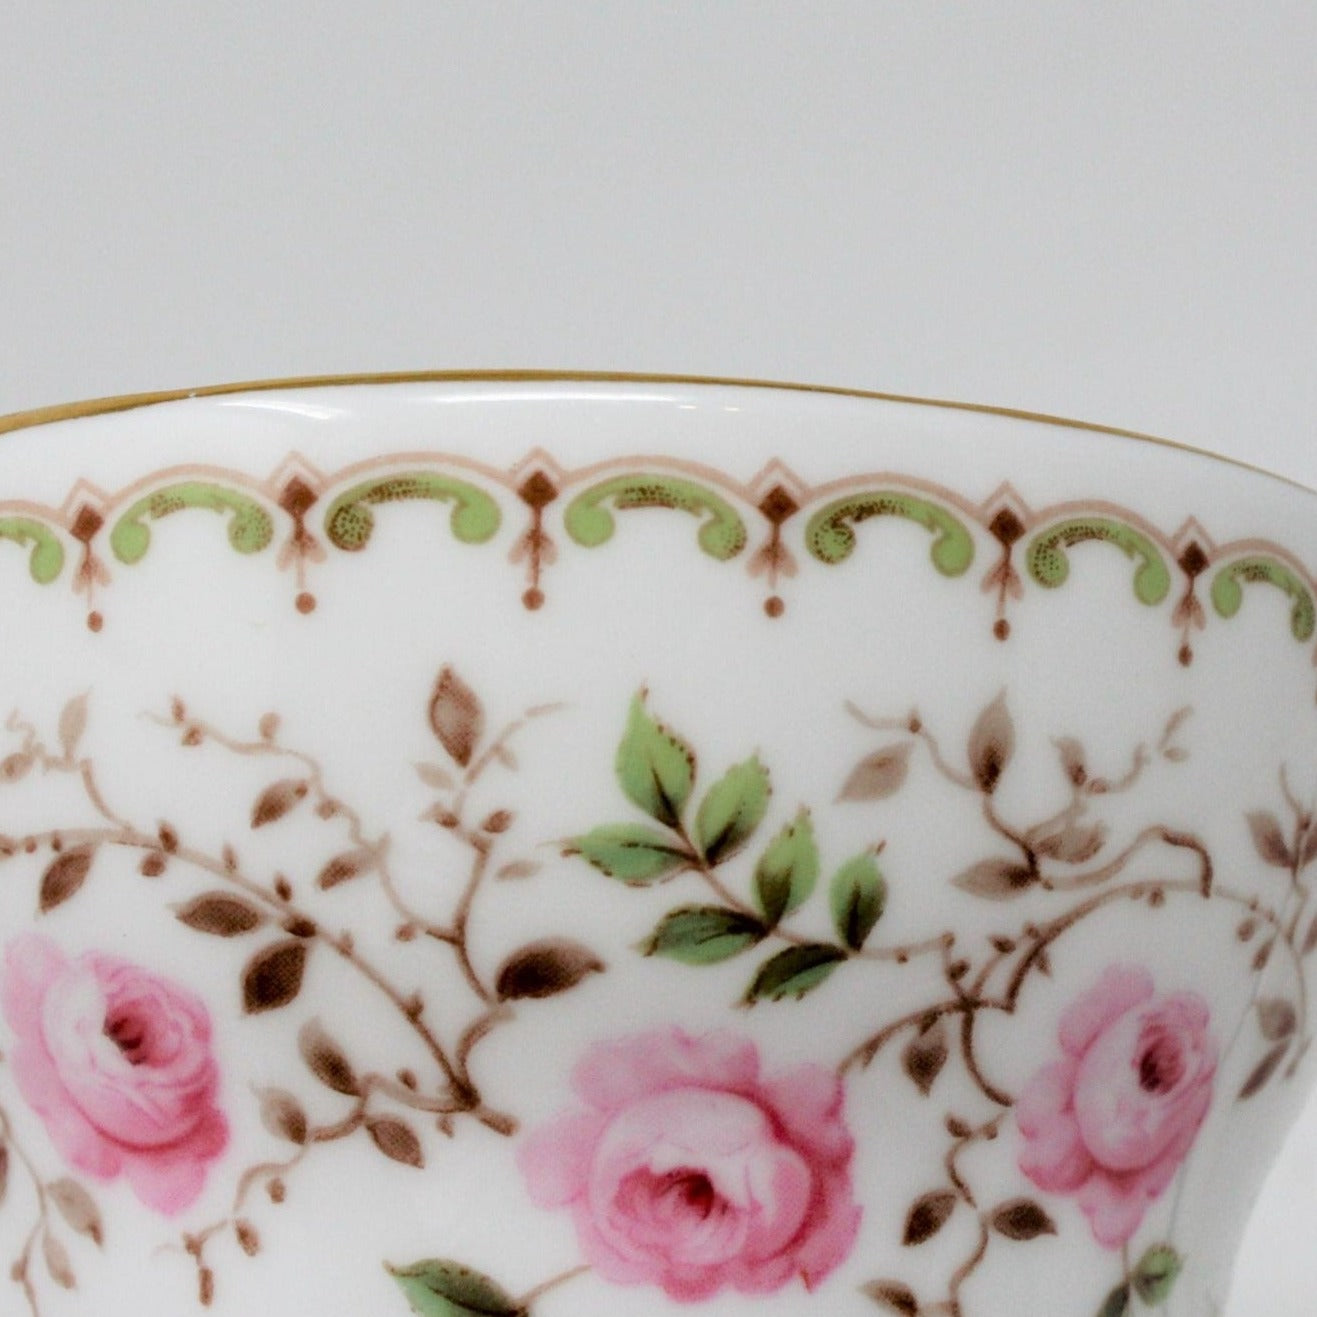 Teacup and Saucer, Duchess China, Fragrance, Bone China, Vintage England